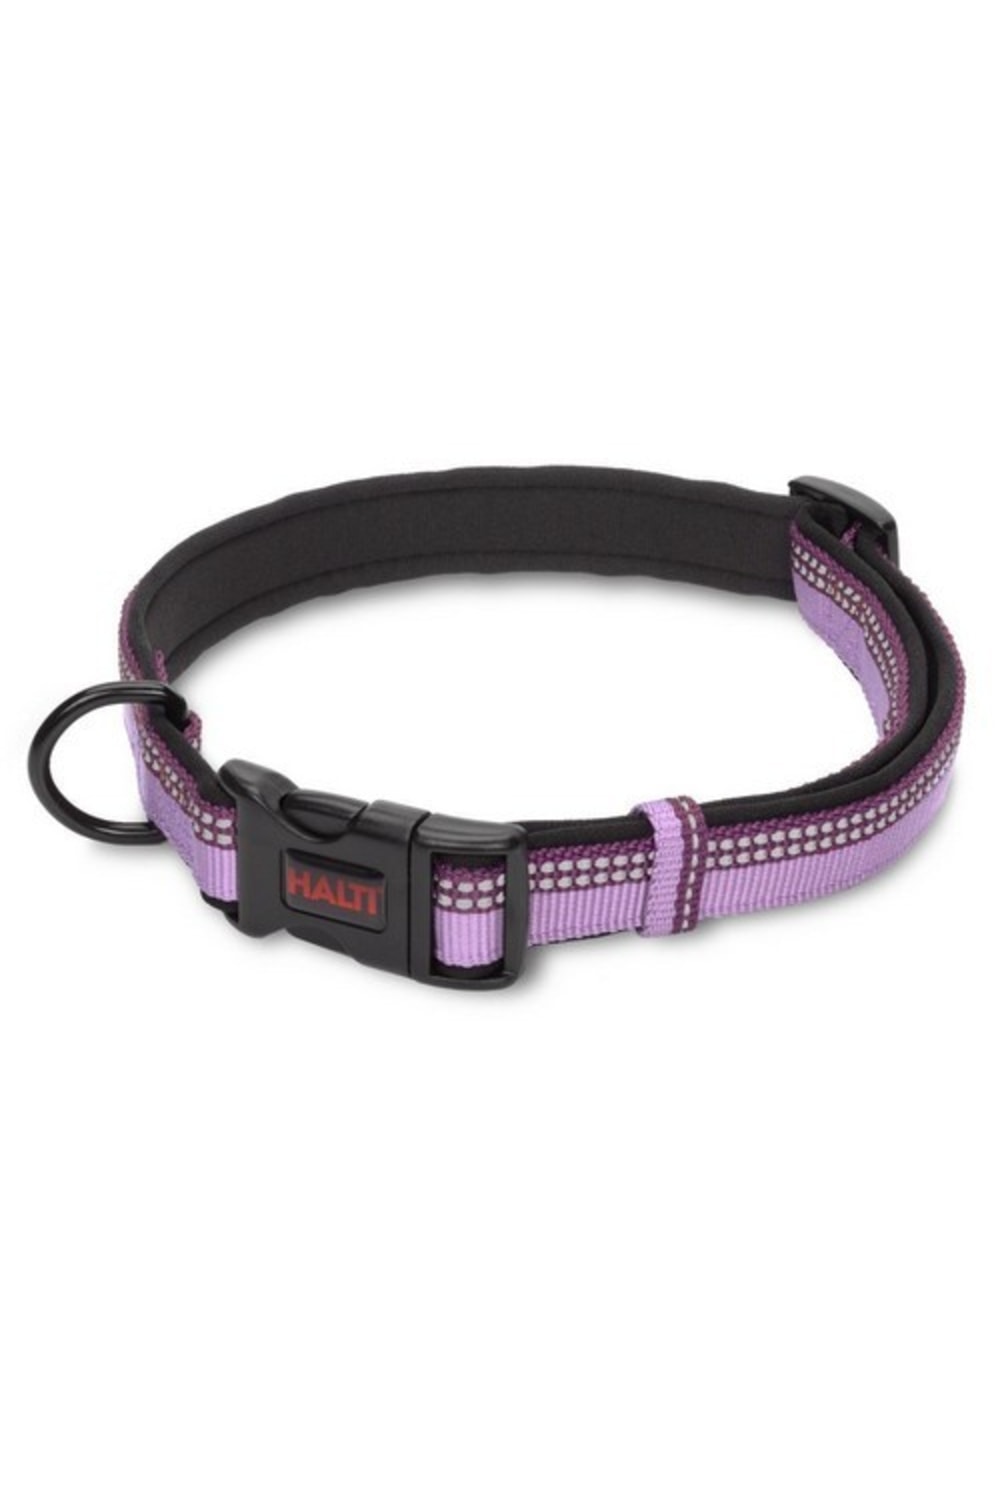 Halti Collar (Purple) (9-13in)